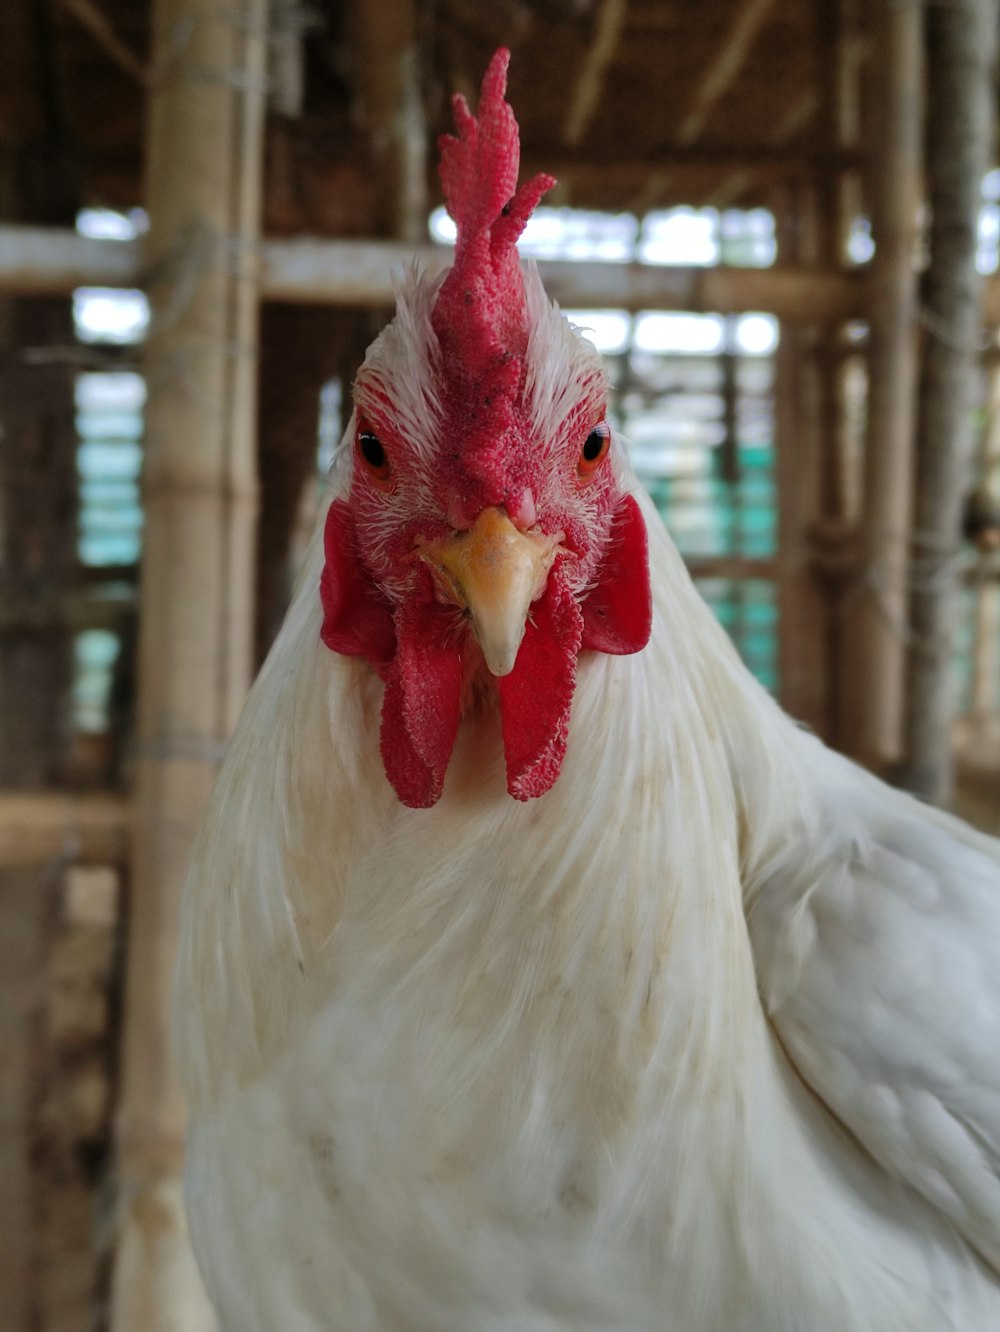 white chicken in cage during daytime